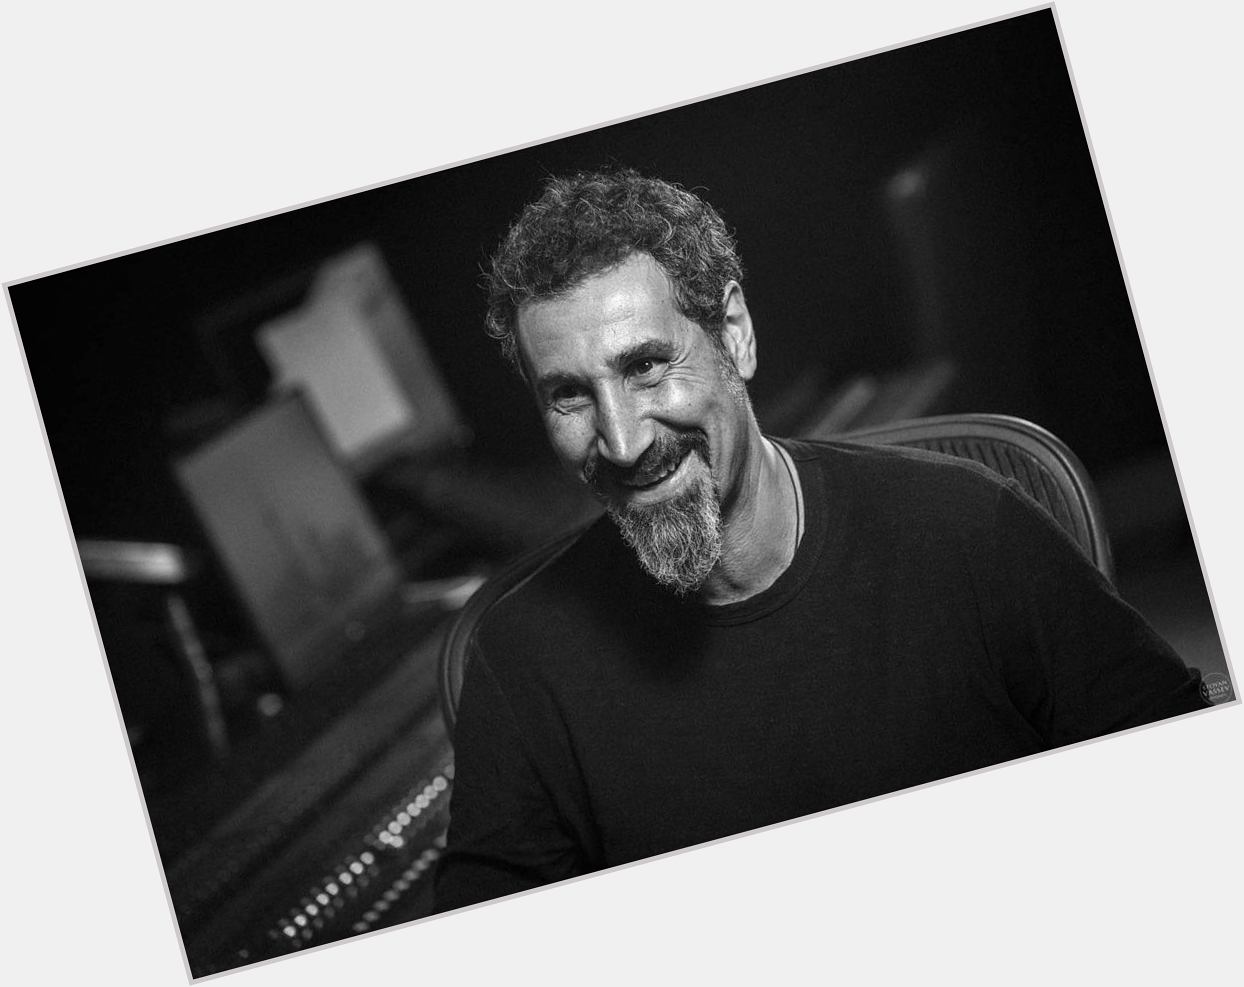 Happy Birthday \Serj Tankian\
Band: System of a Down
Age: 51 